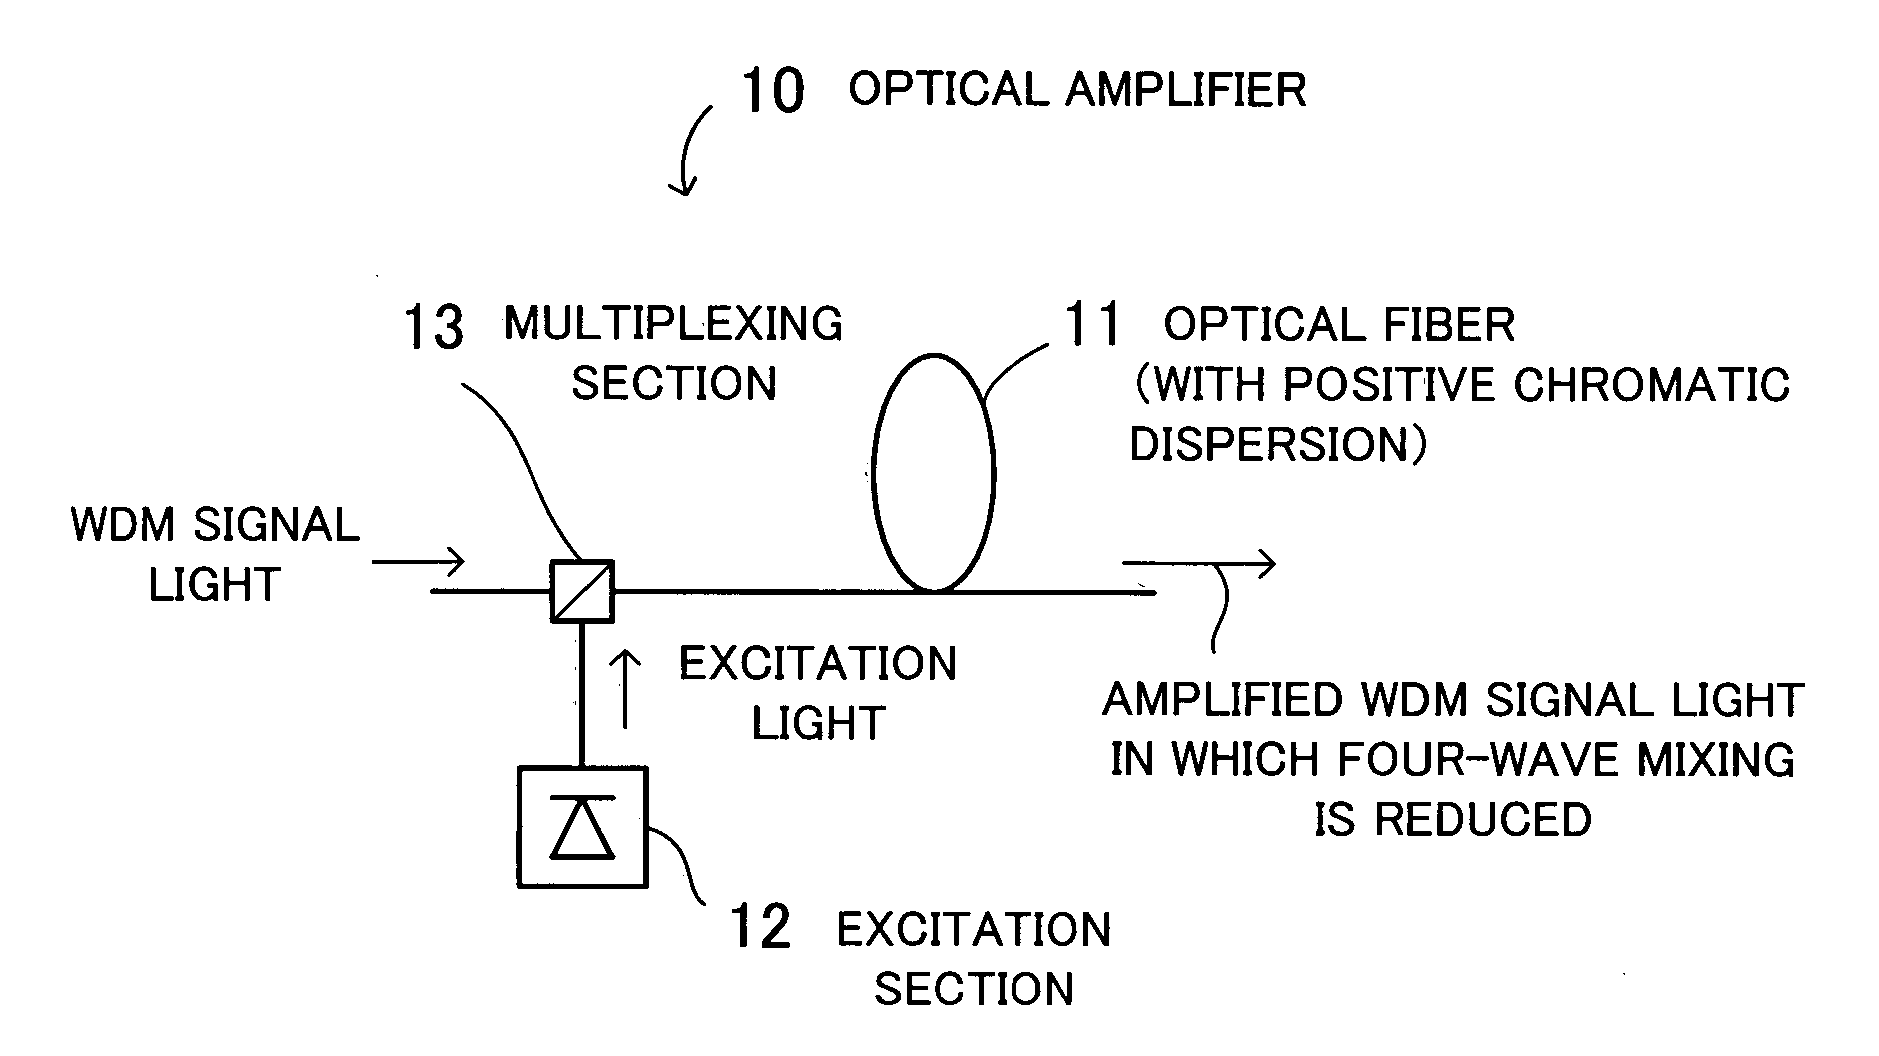 Optical amplifier and optical fiber